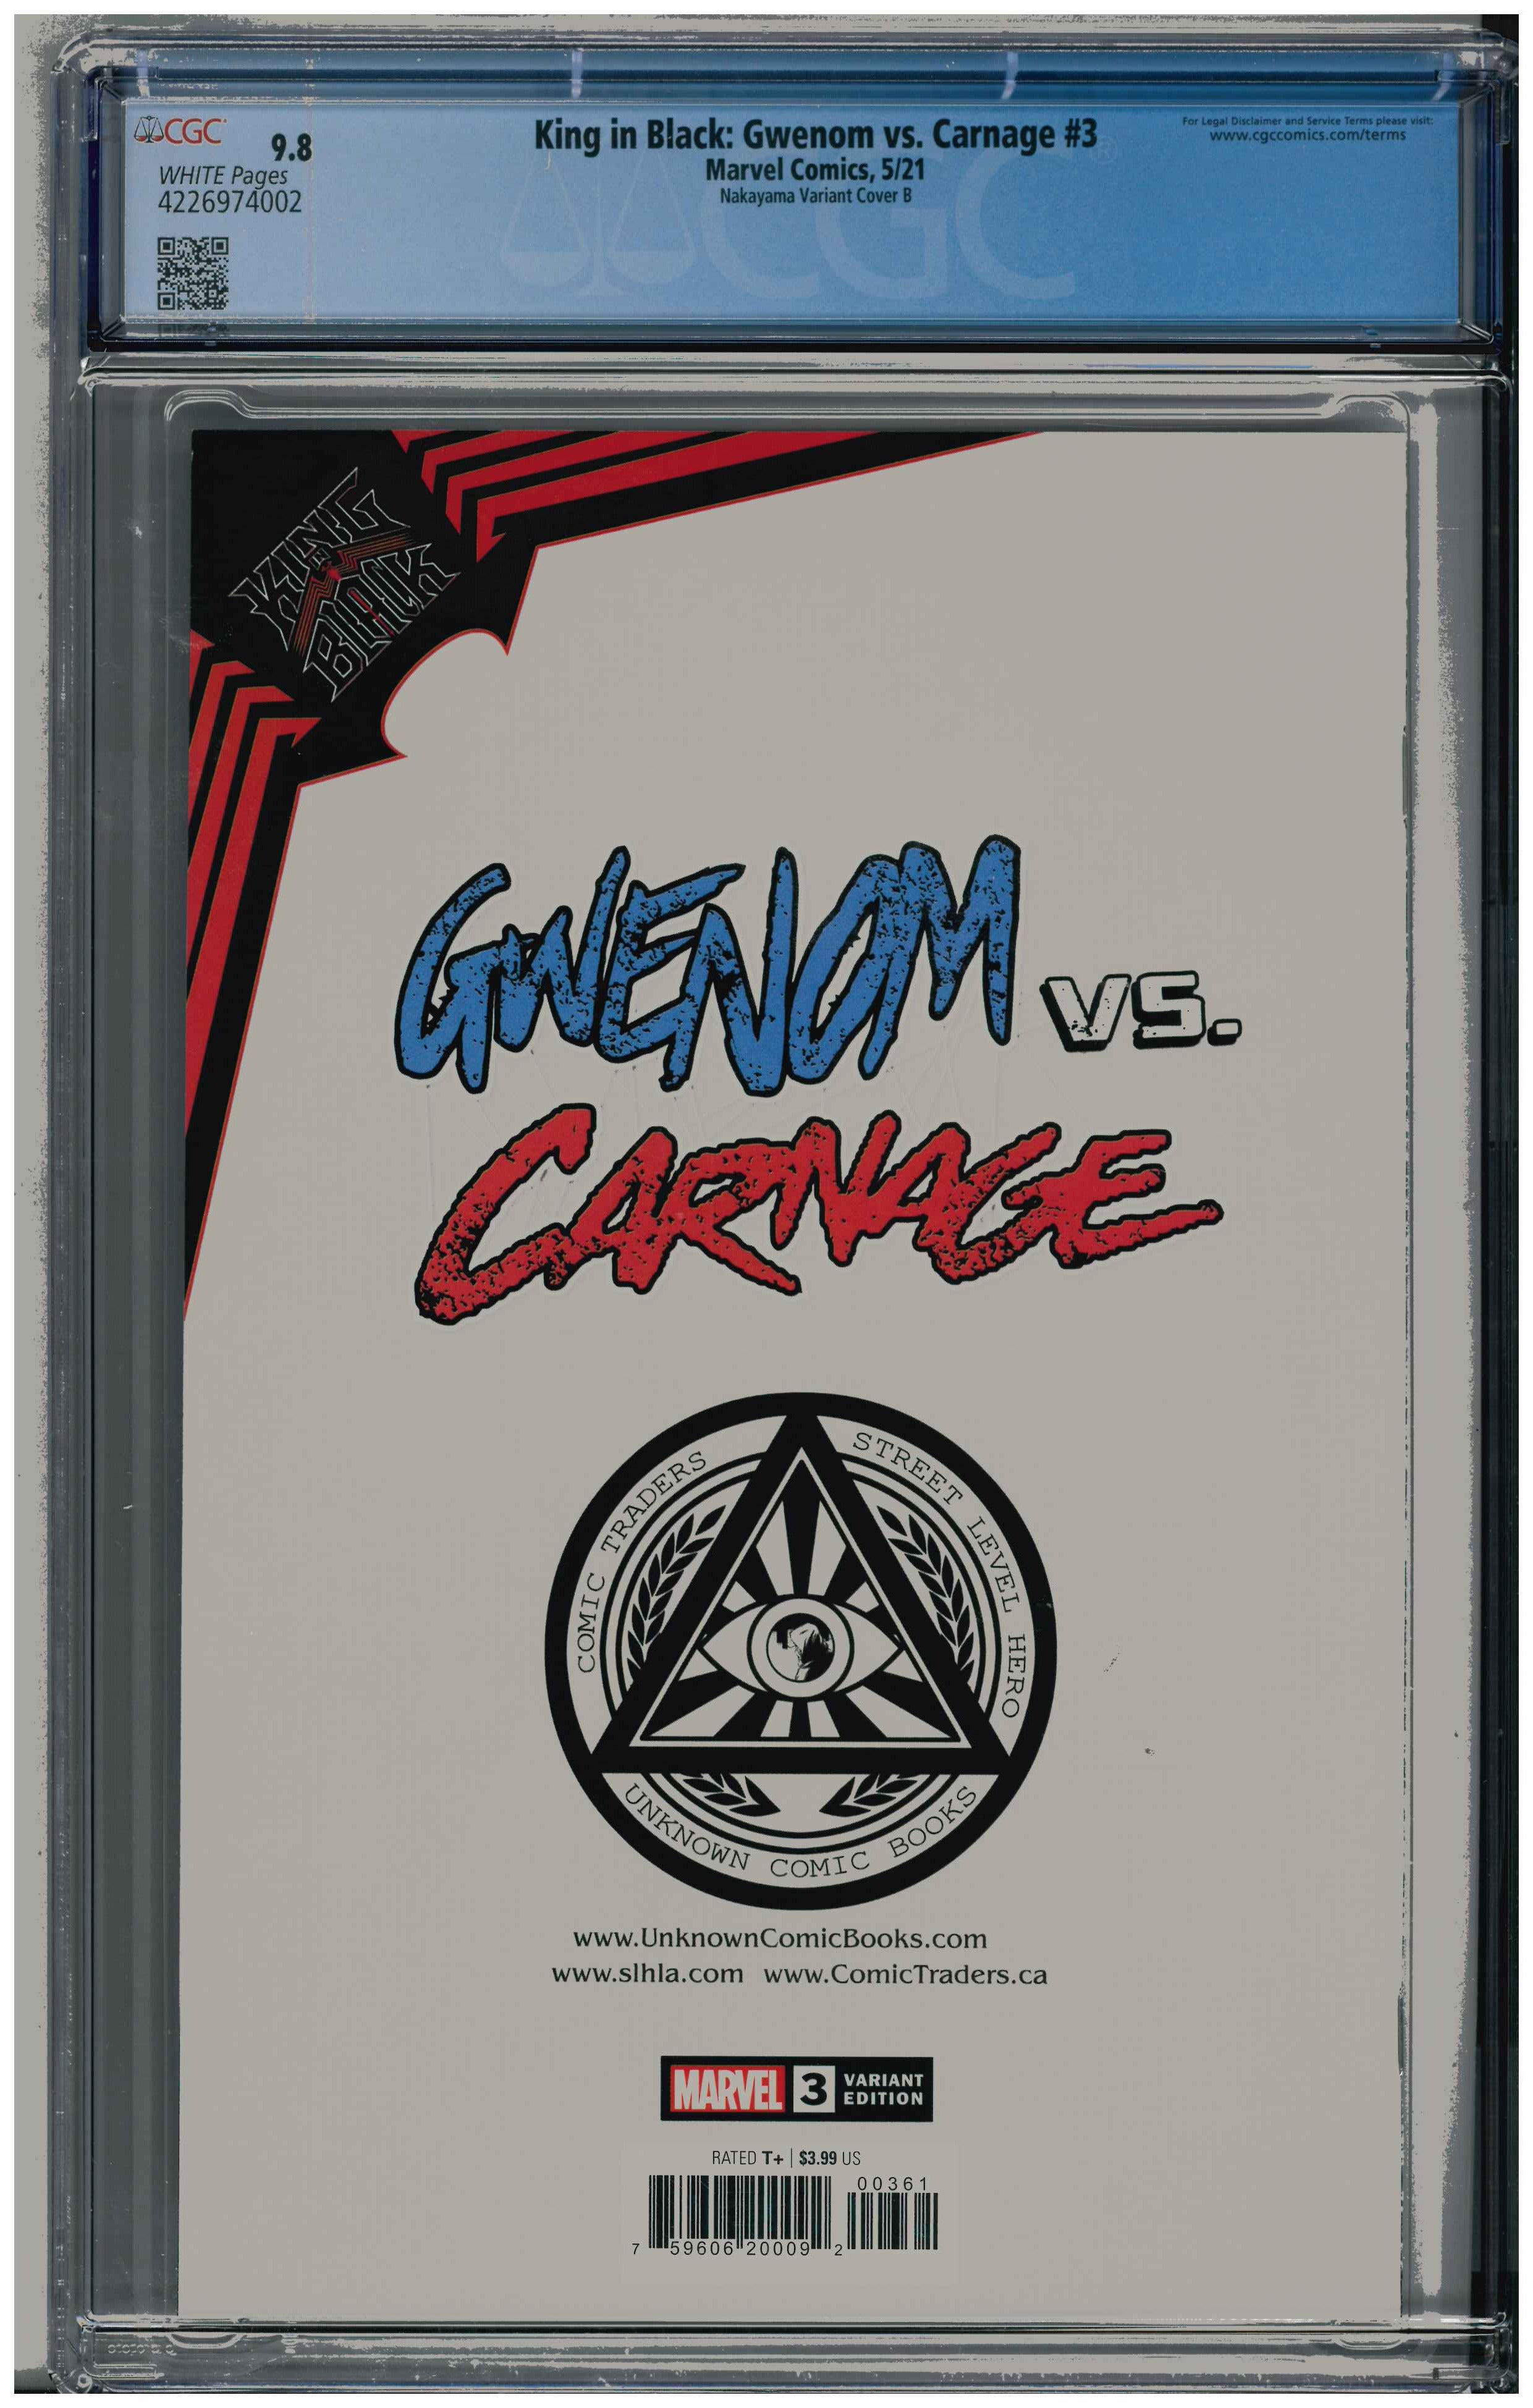 King in Black: Gwenom vs. Carnage #3